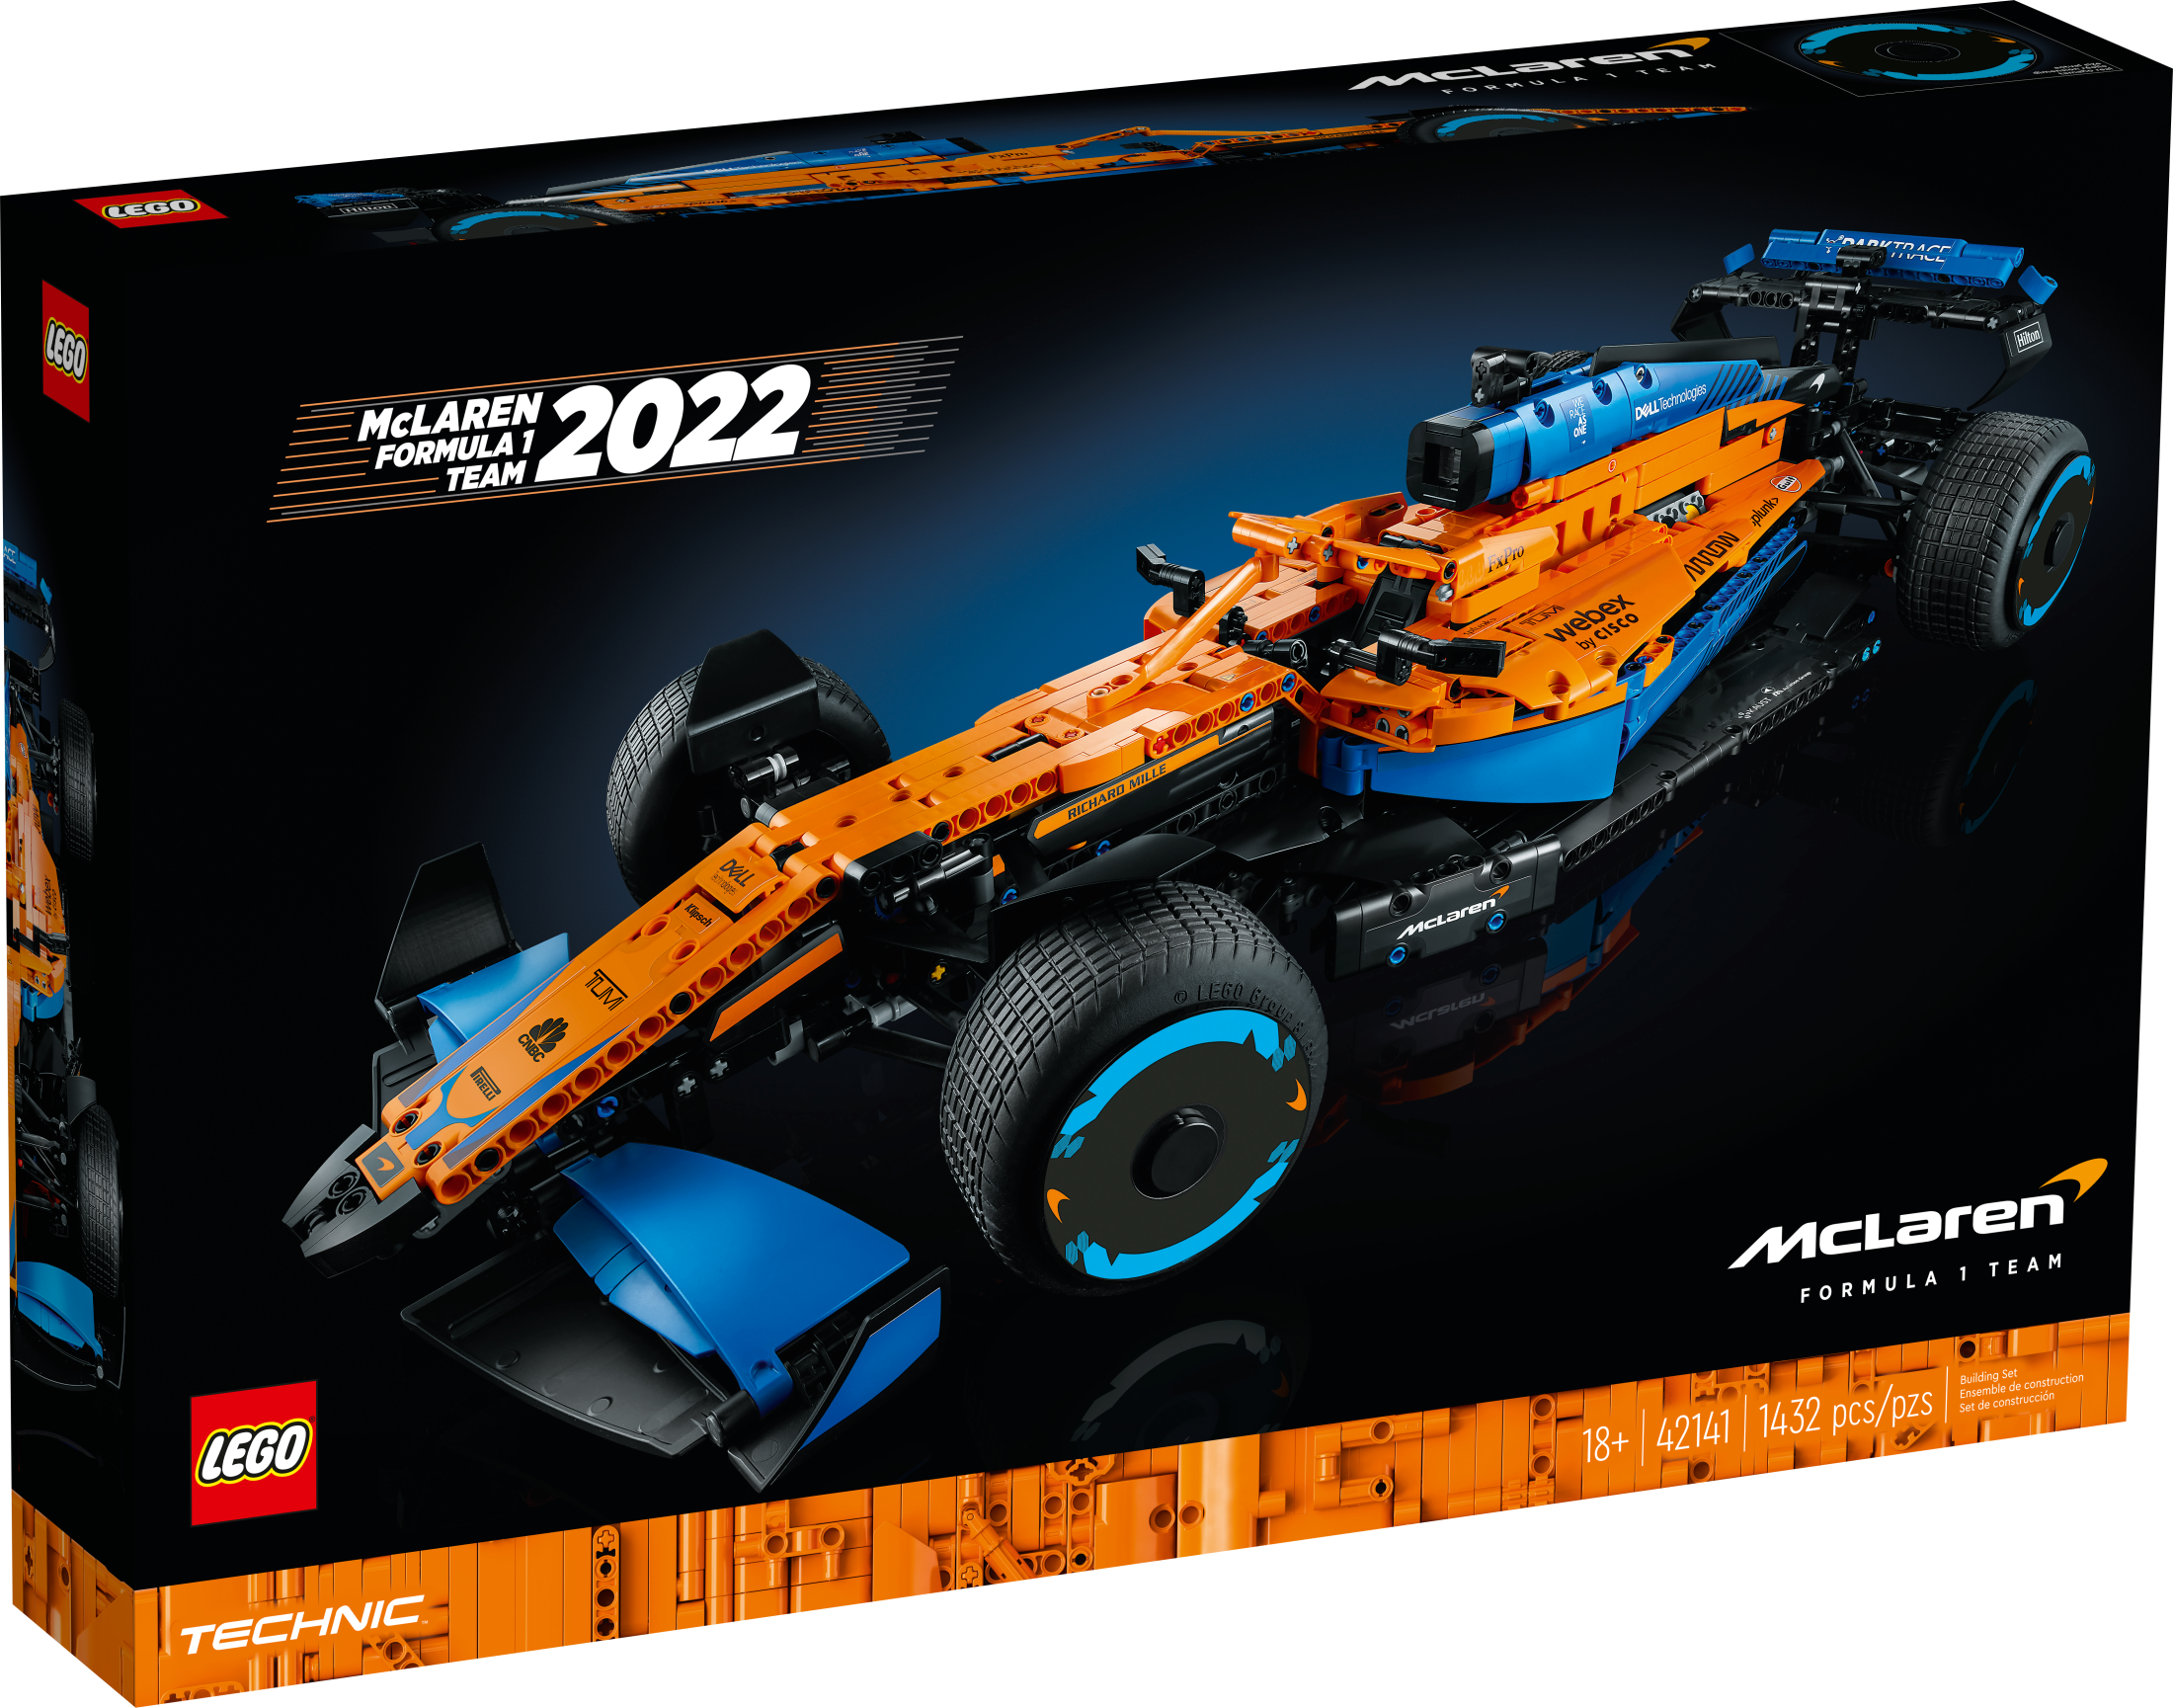 LEGO 42141 Technic McLaren Formula 1 2022 Replica Race Car Model Building Kit, F1 Motor Sport Set Birthday Gift Idea for Adults, Men, Women, Him, Her, Husband, Collectible Home Decor - image 4 of 9